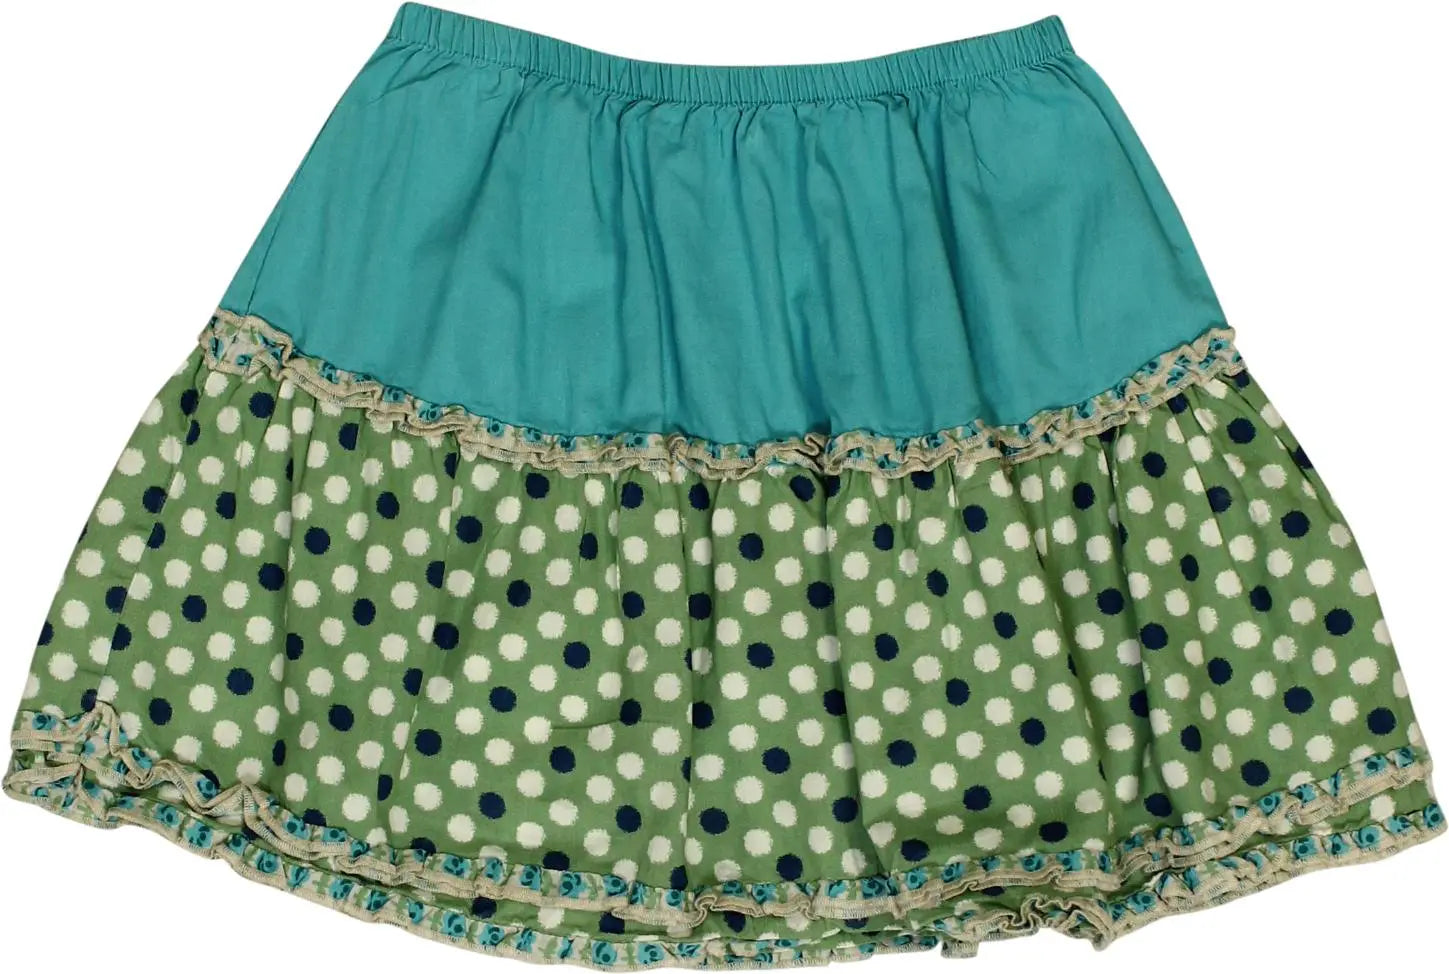 Oshkosh - Polka Dot Skirt- ThriftTale.com - Vintage and second handclothing